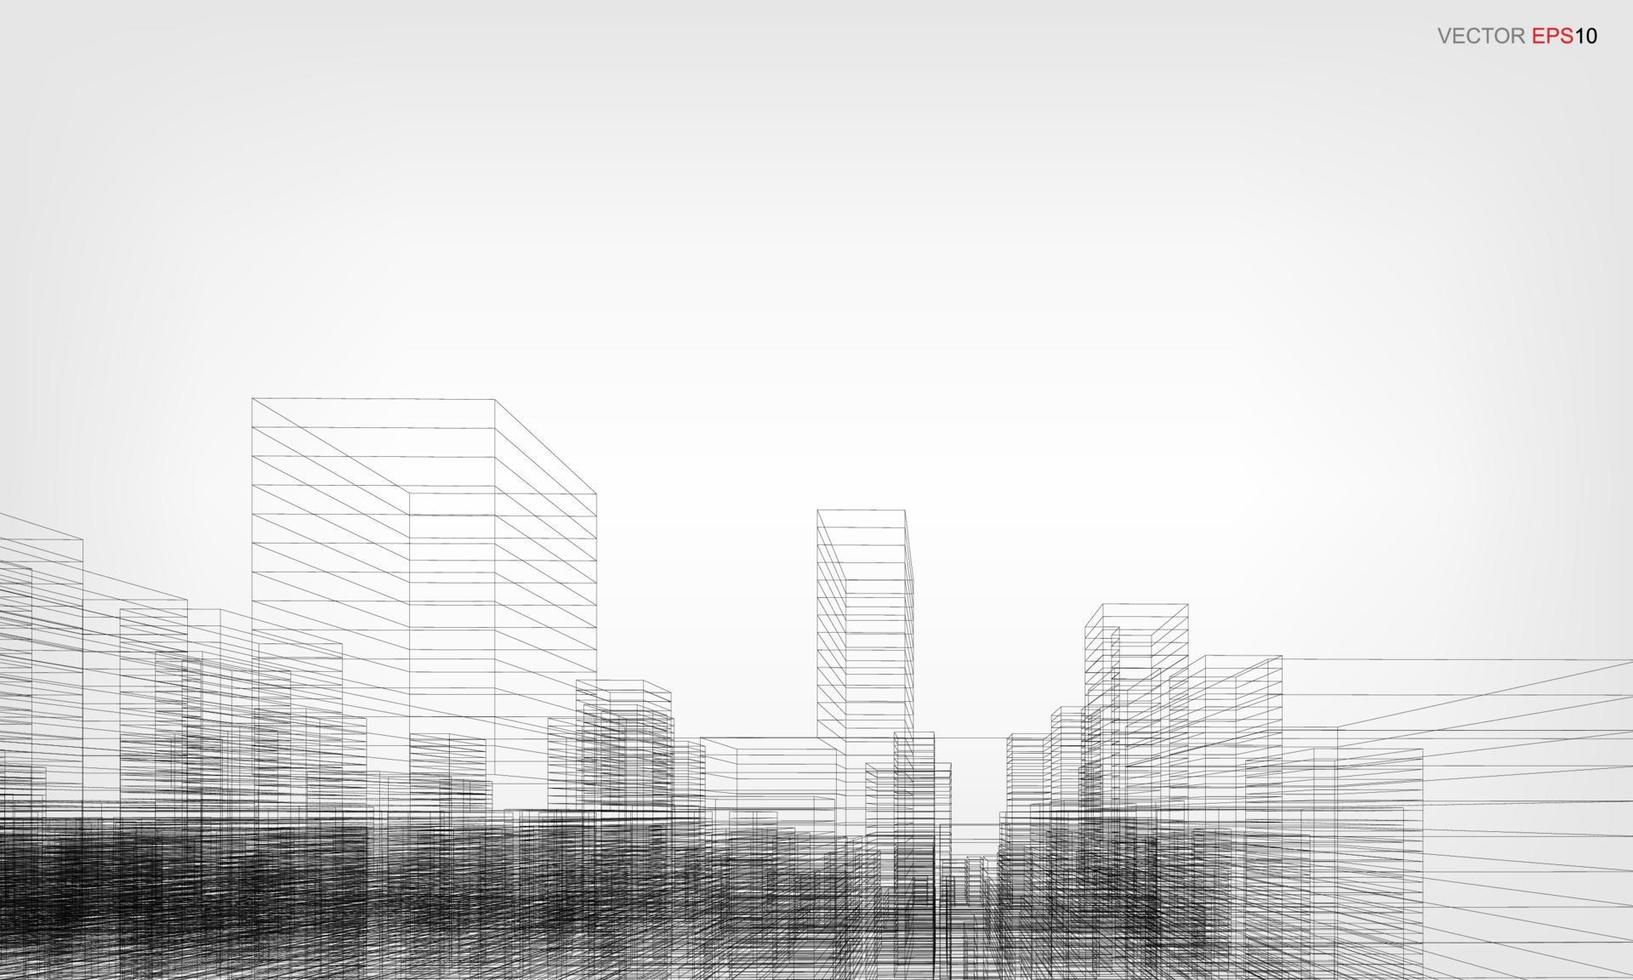 wireframe city bakgrund. perspektiv 3d render av att bygga wireframe. vektor. vektor